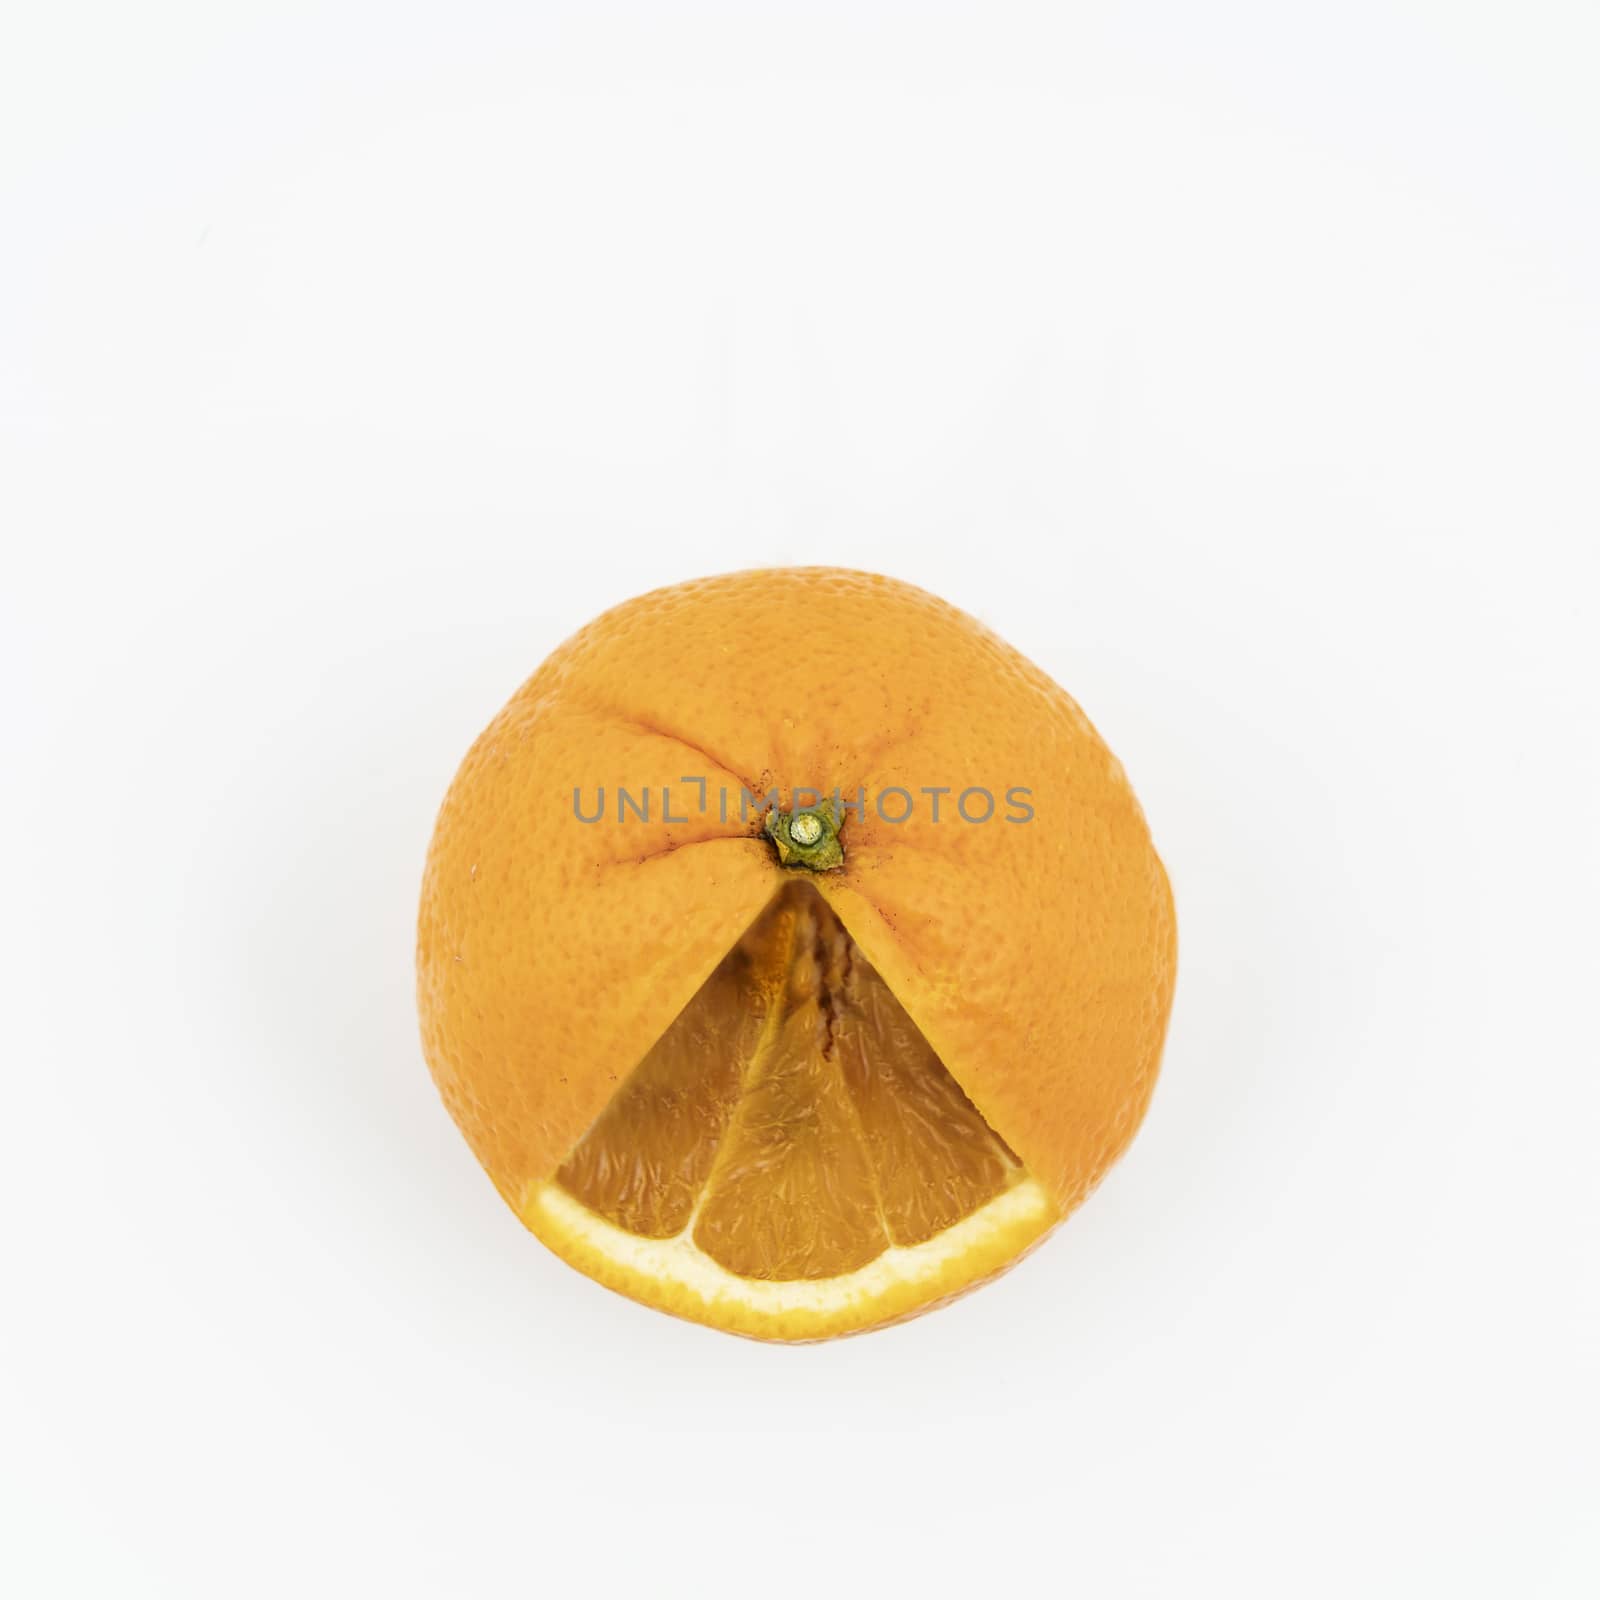 an orange cut on a white surface